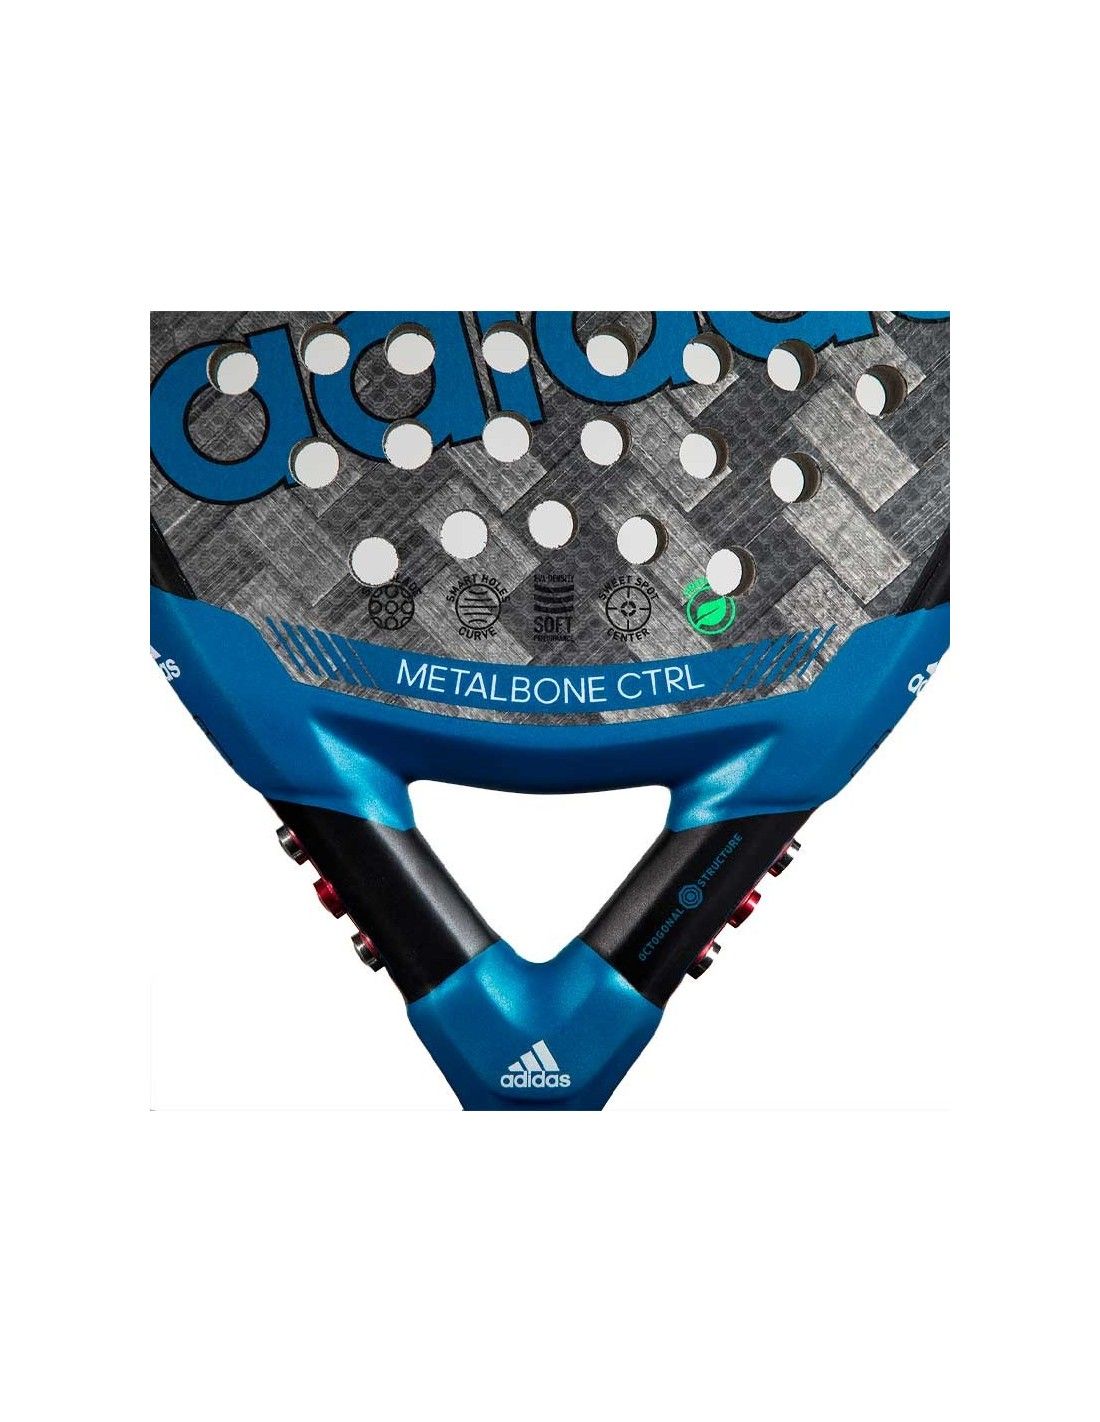 Adidas Metalbone 3.1 Ctrl 2022 Racchette da padel adidas